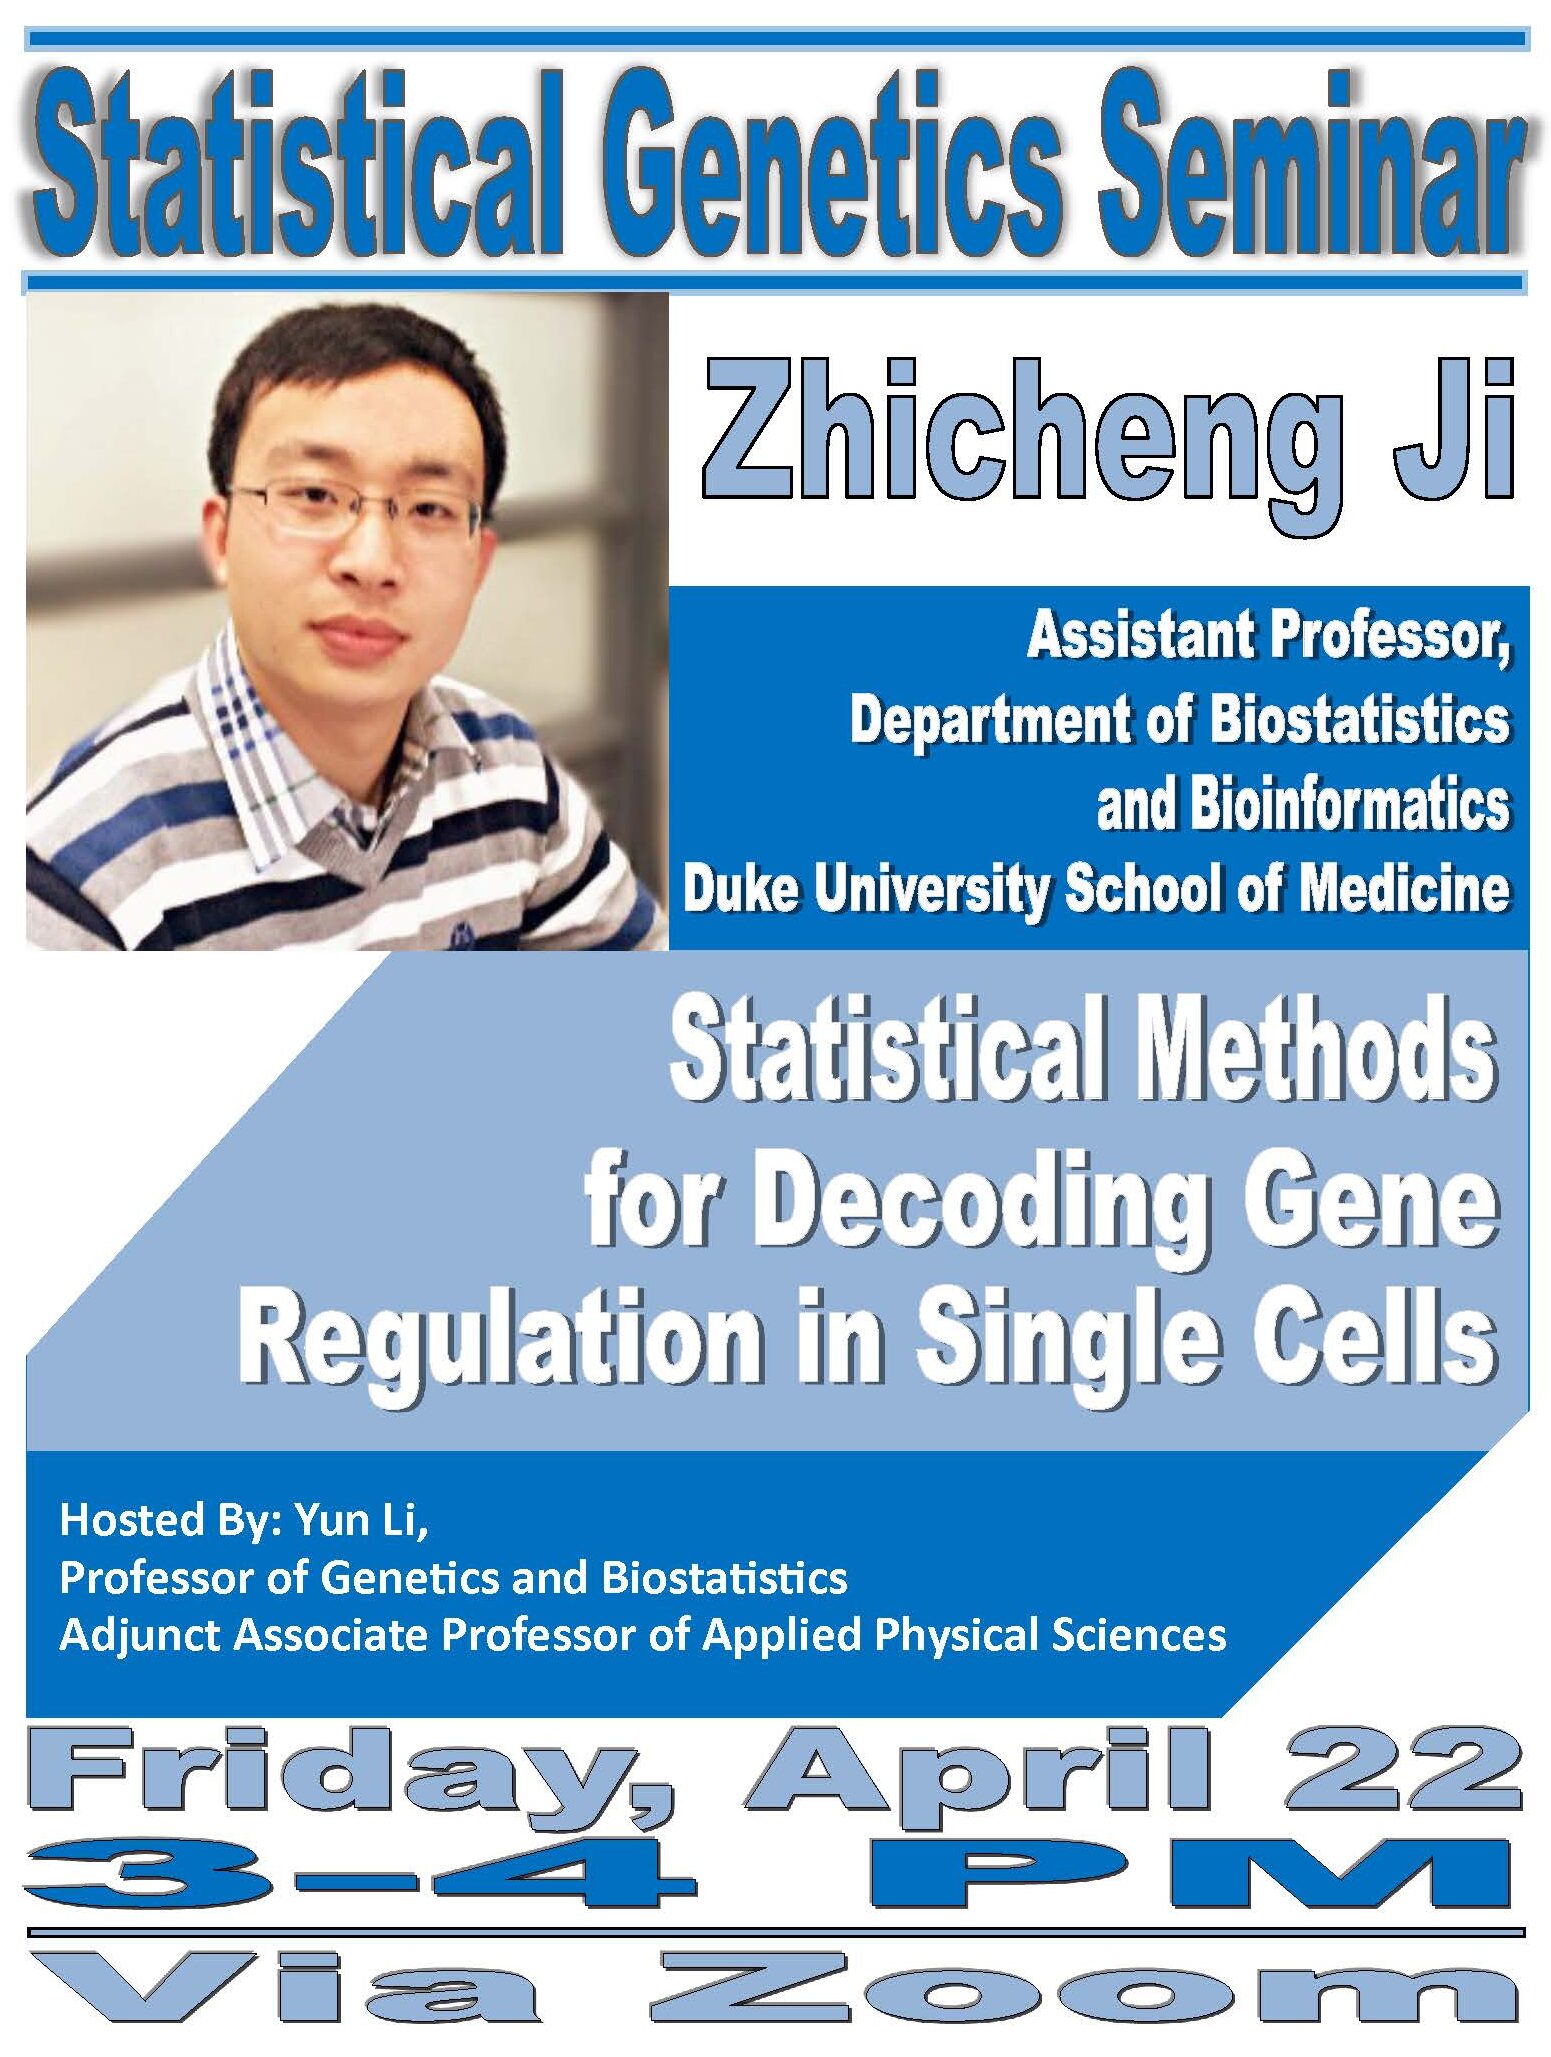 Statistical Genetics Seminar_Zhicheng Ji 0422